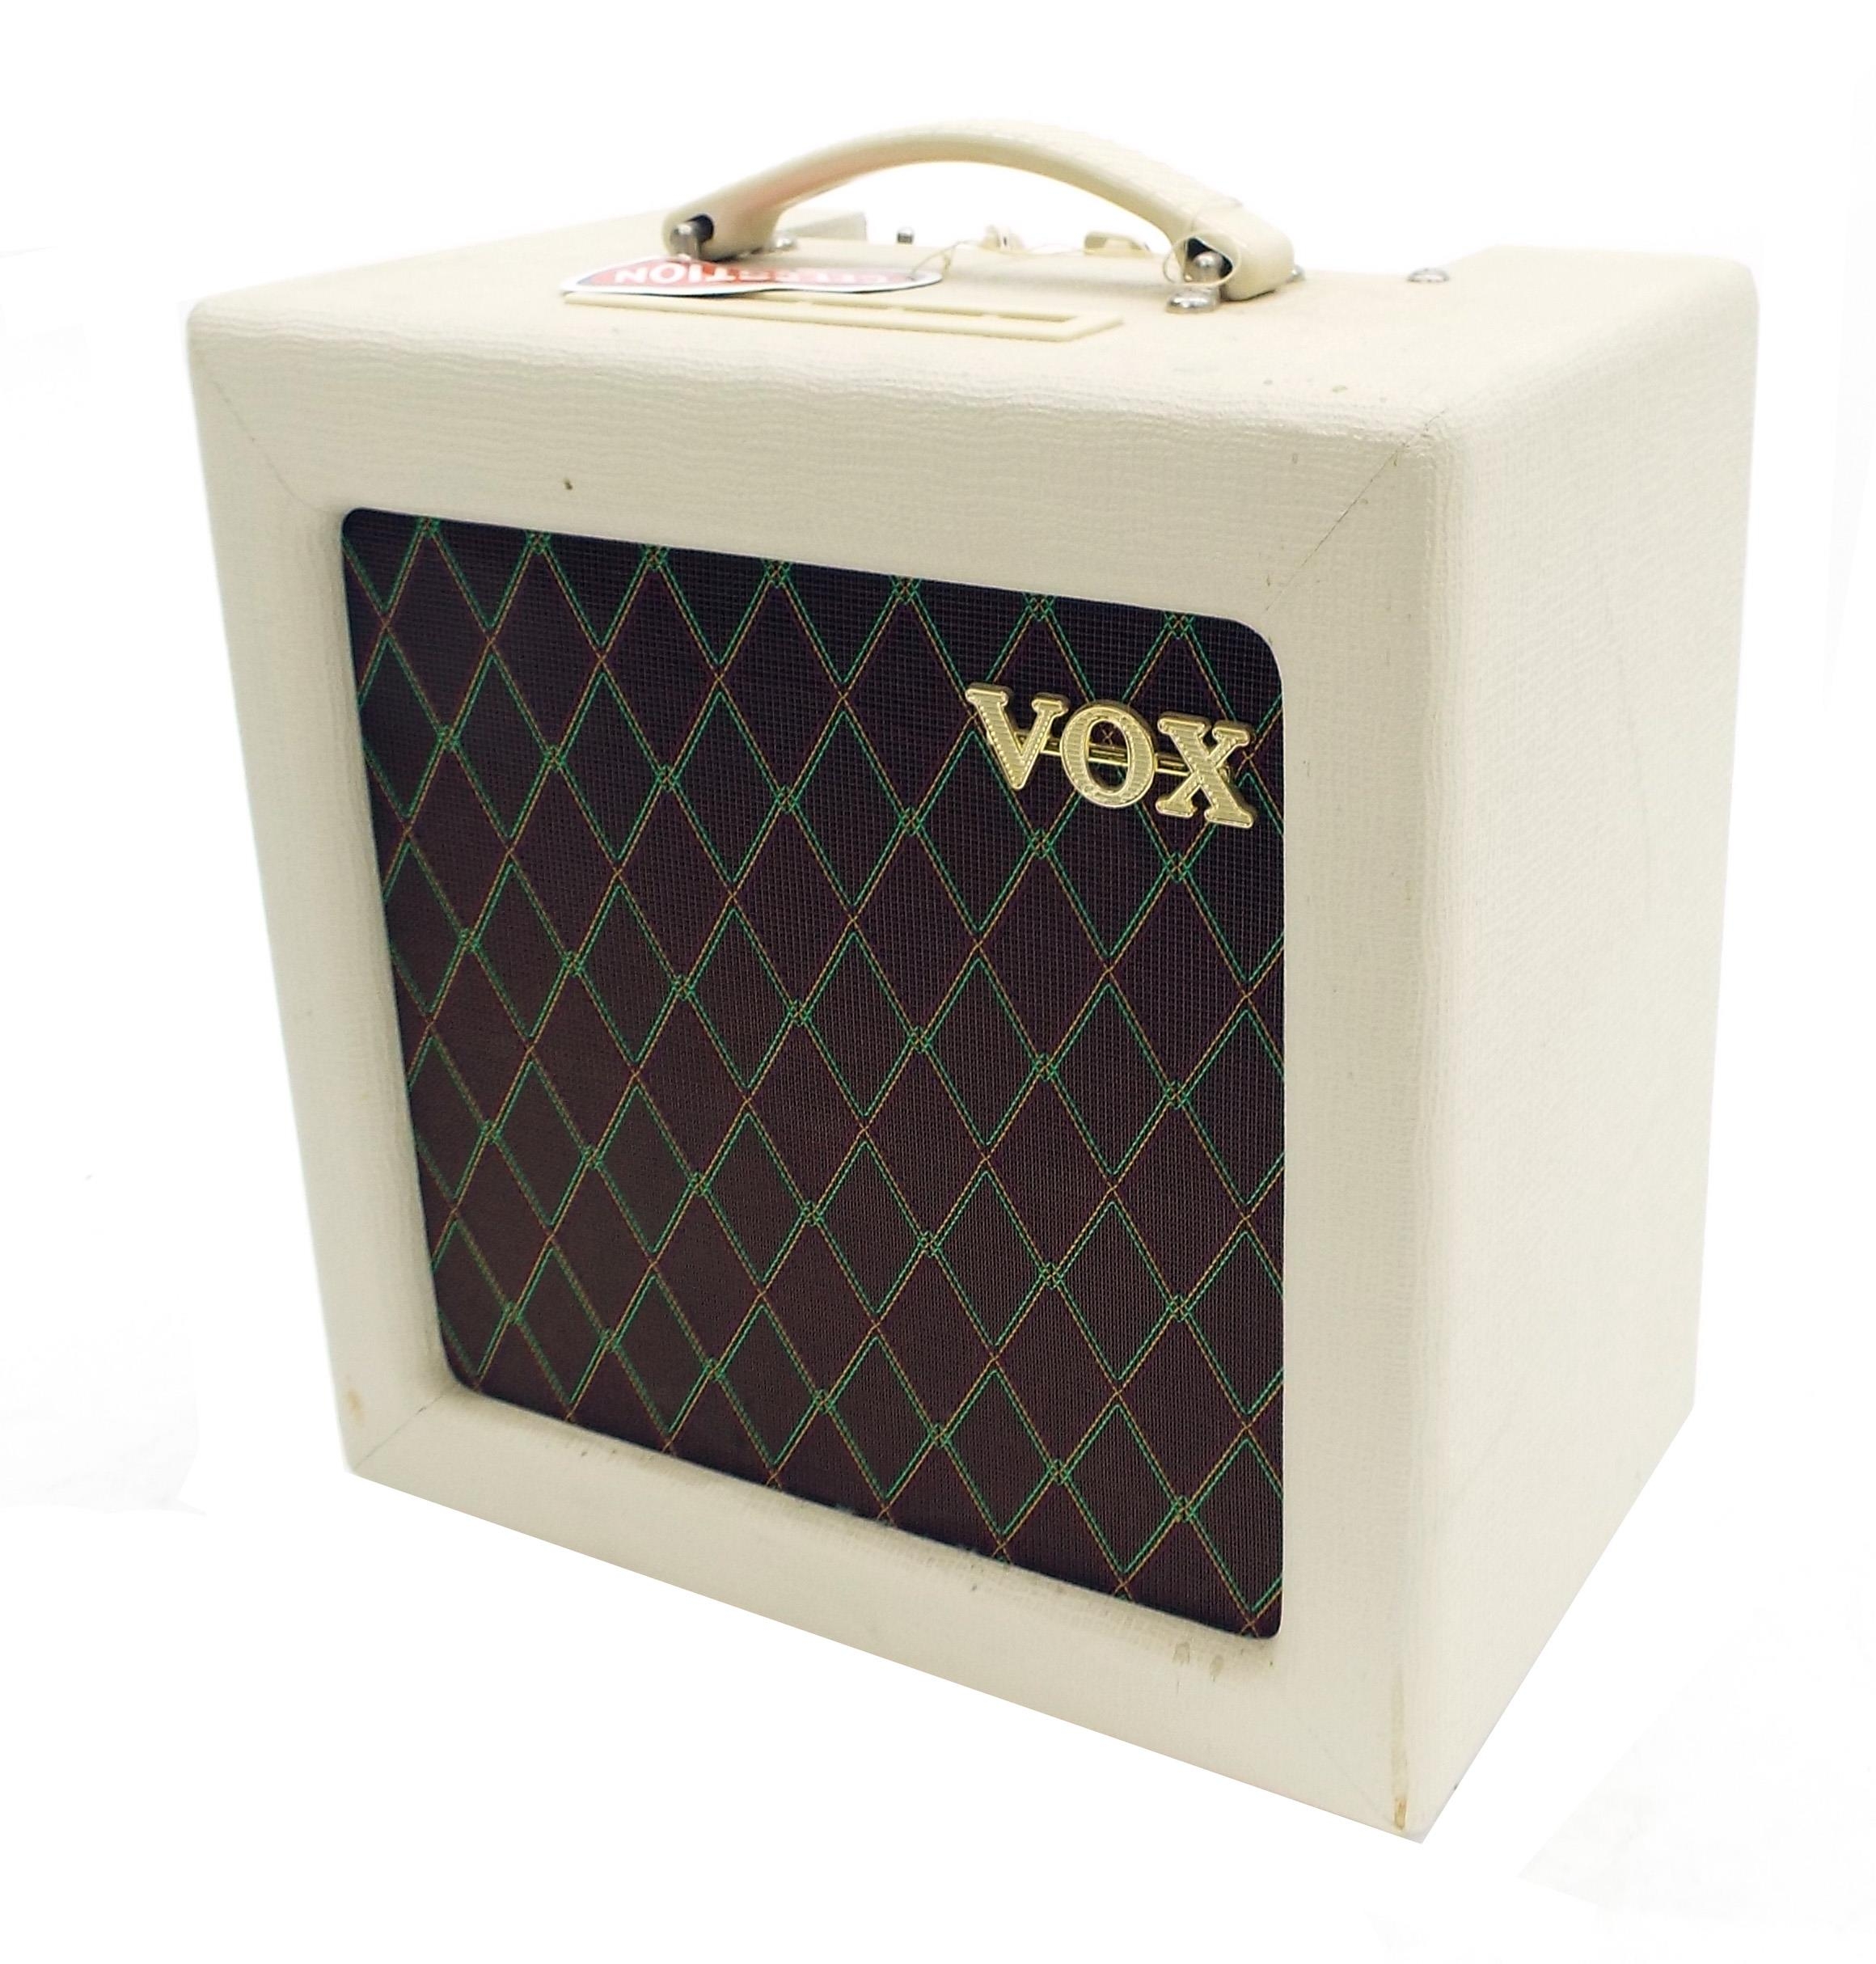 Vox AC4TV guitar amplifier, boxed